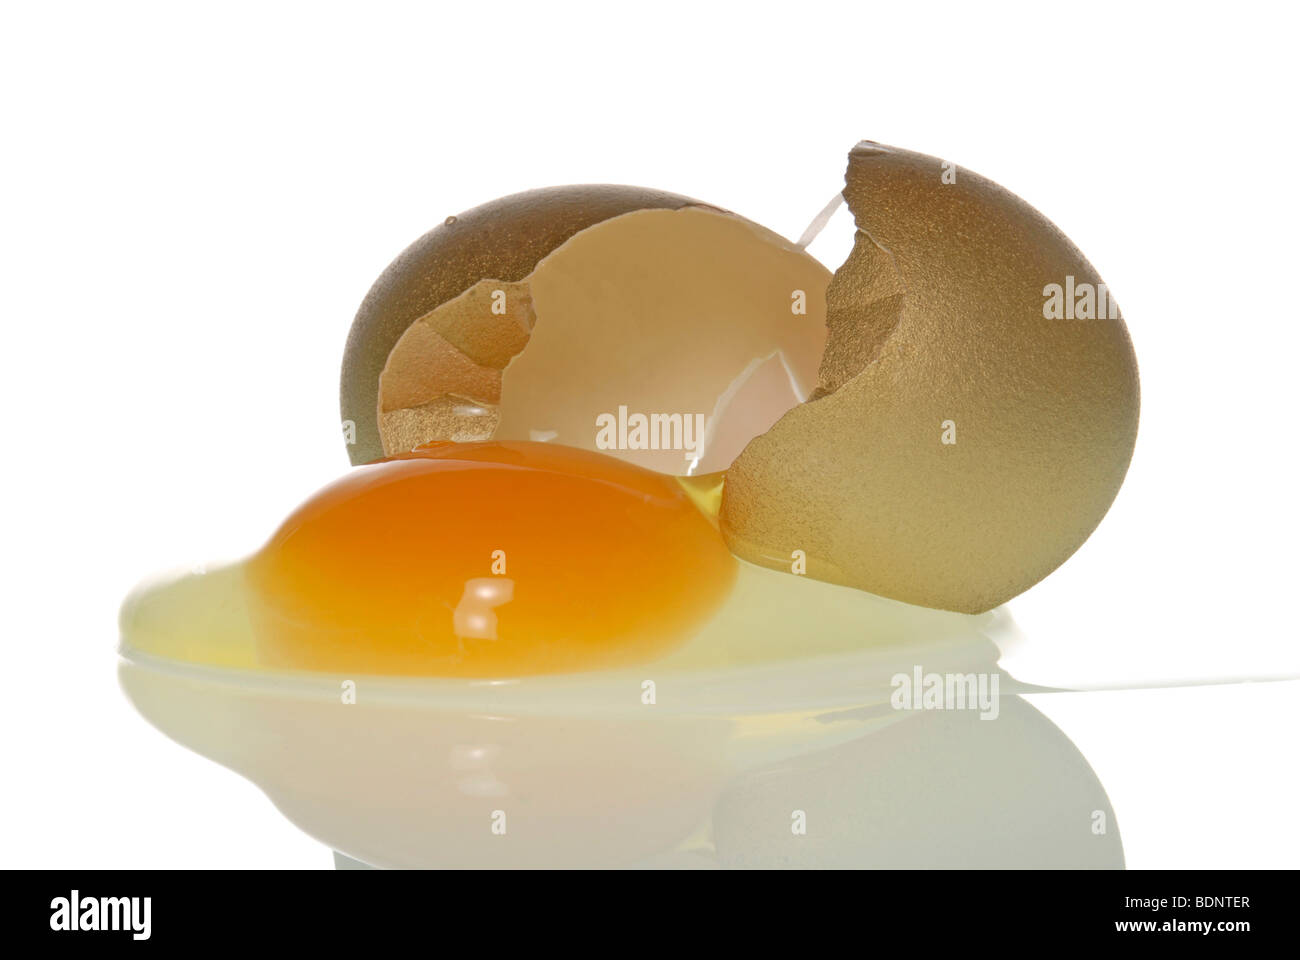 Broken golden egg, symbolic image icon for a bad idea Stock Photo